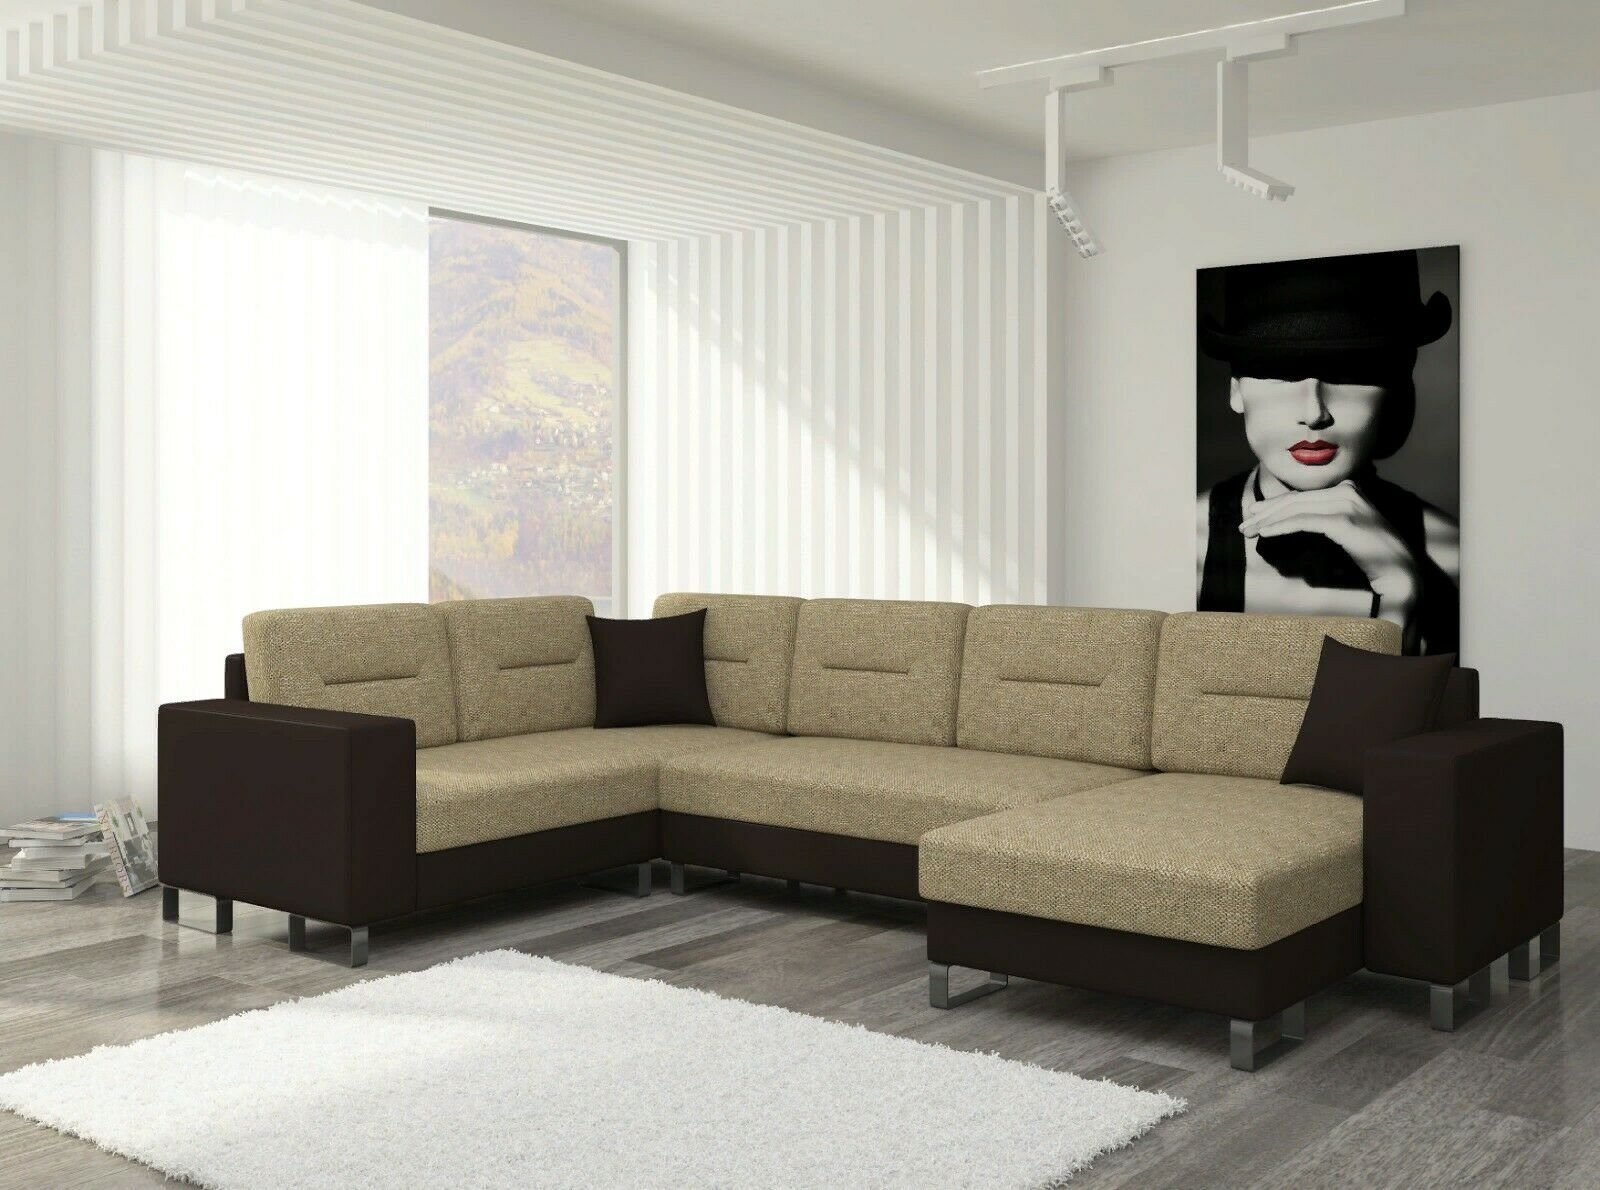 JVmoebel Ecksofa Design Mit Ecksofa Couch Leder Bettfunktion Schlafsofa Polster Bettfunktion Textil, Beige/Braun